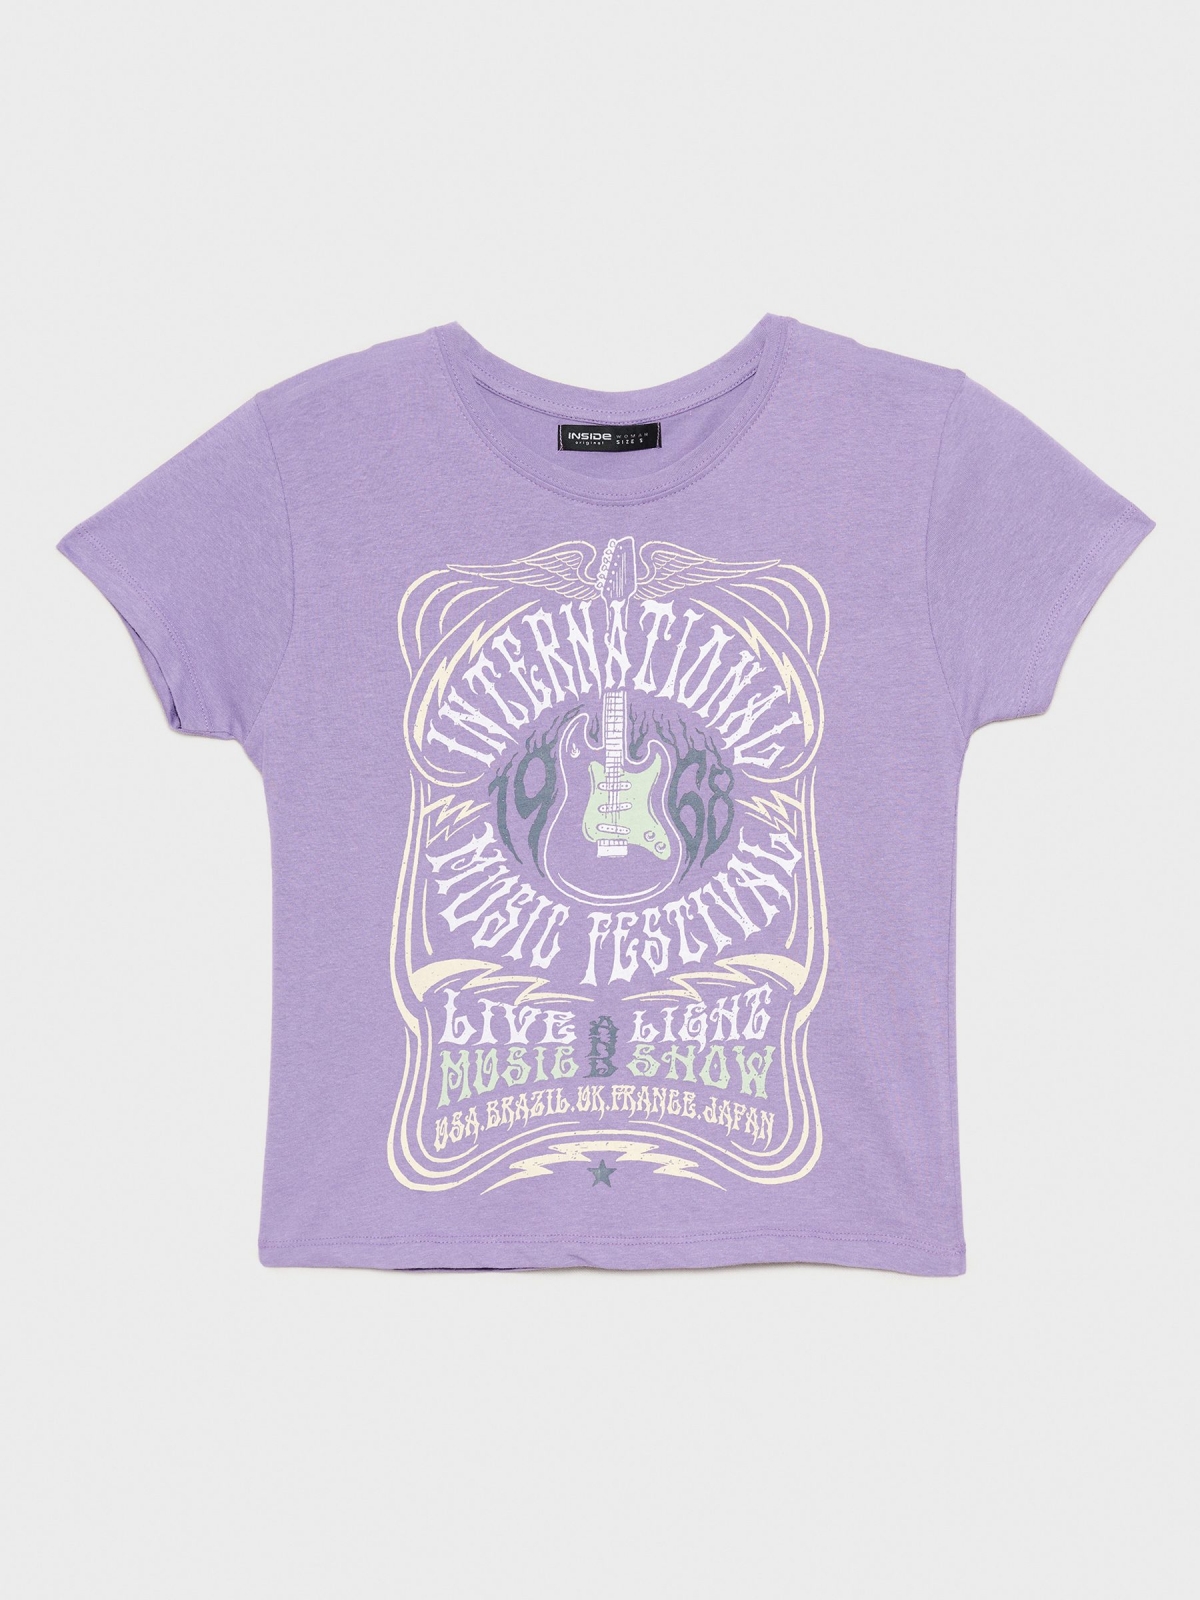  Camiseta estampado Music Festival lila